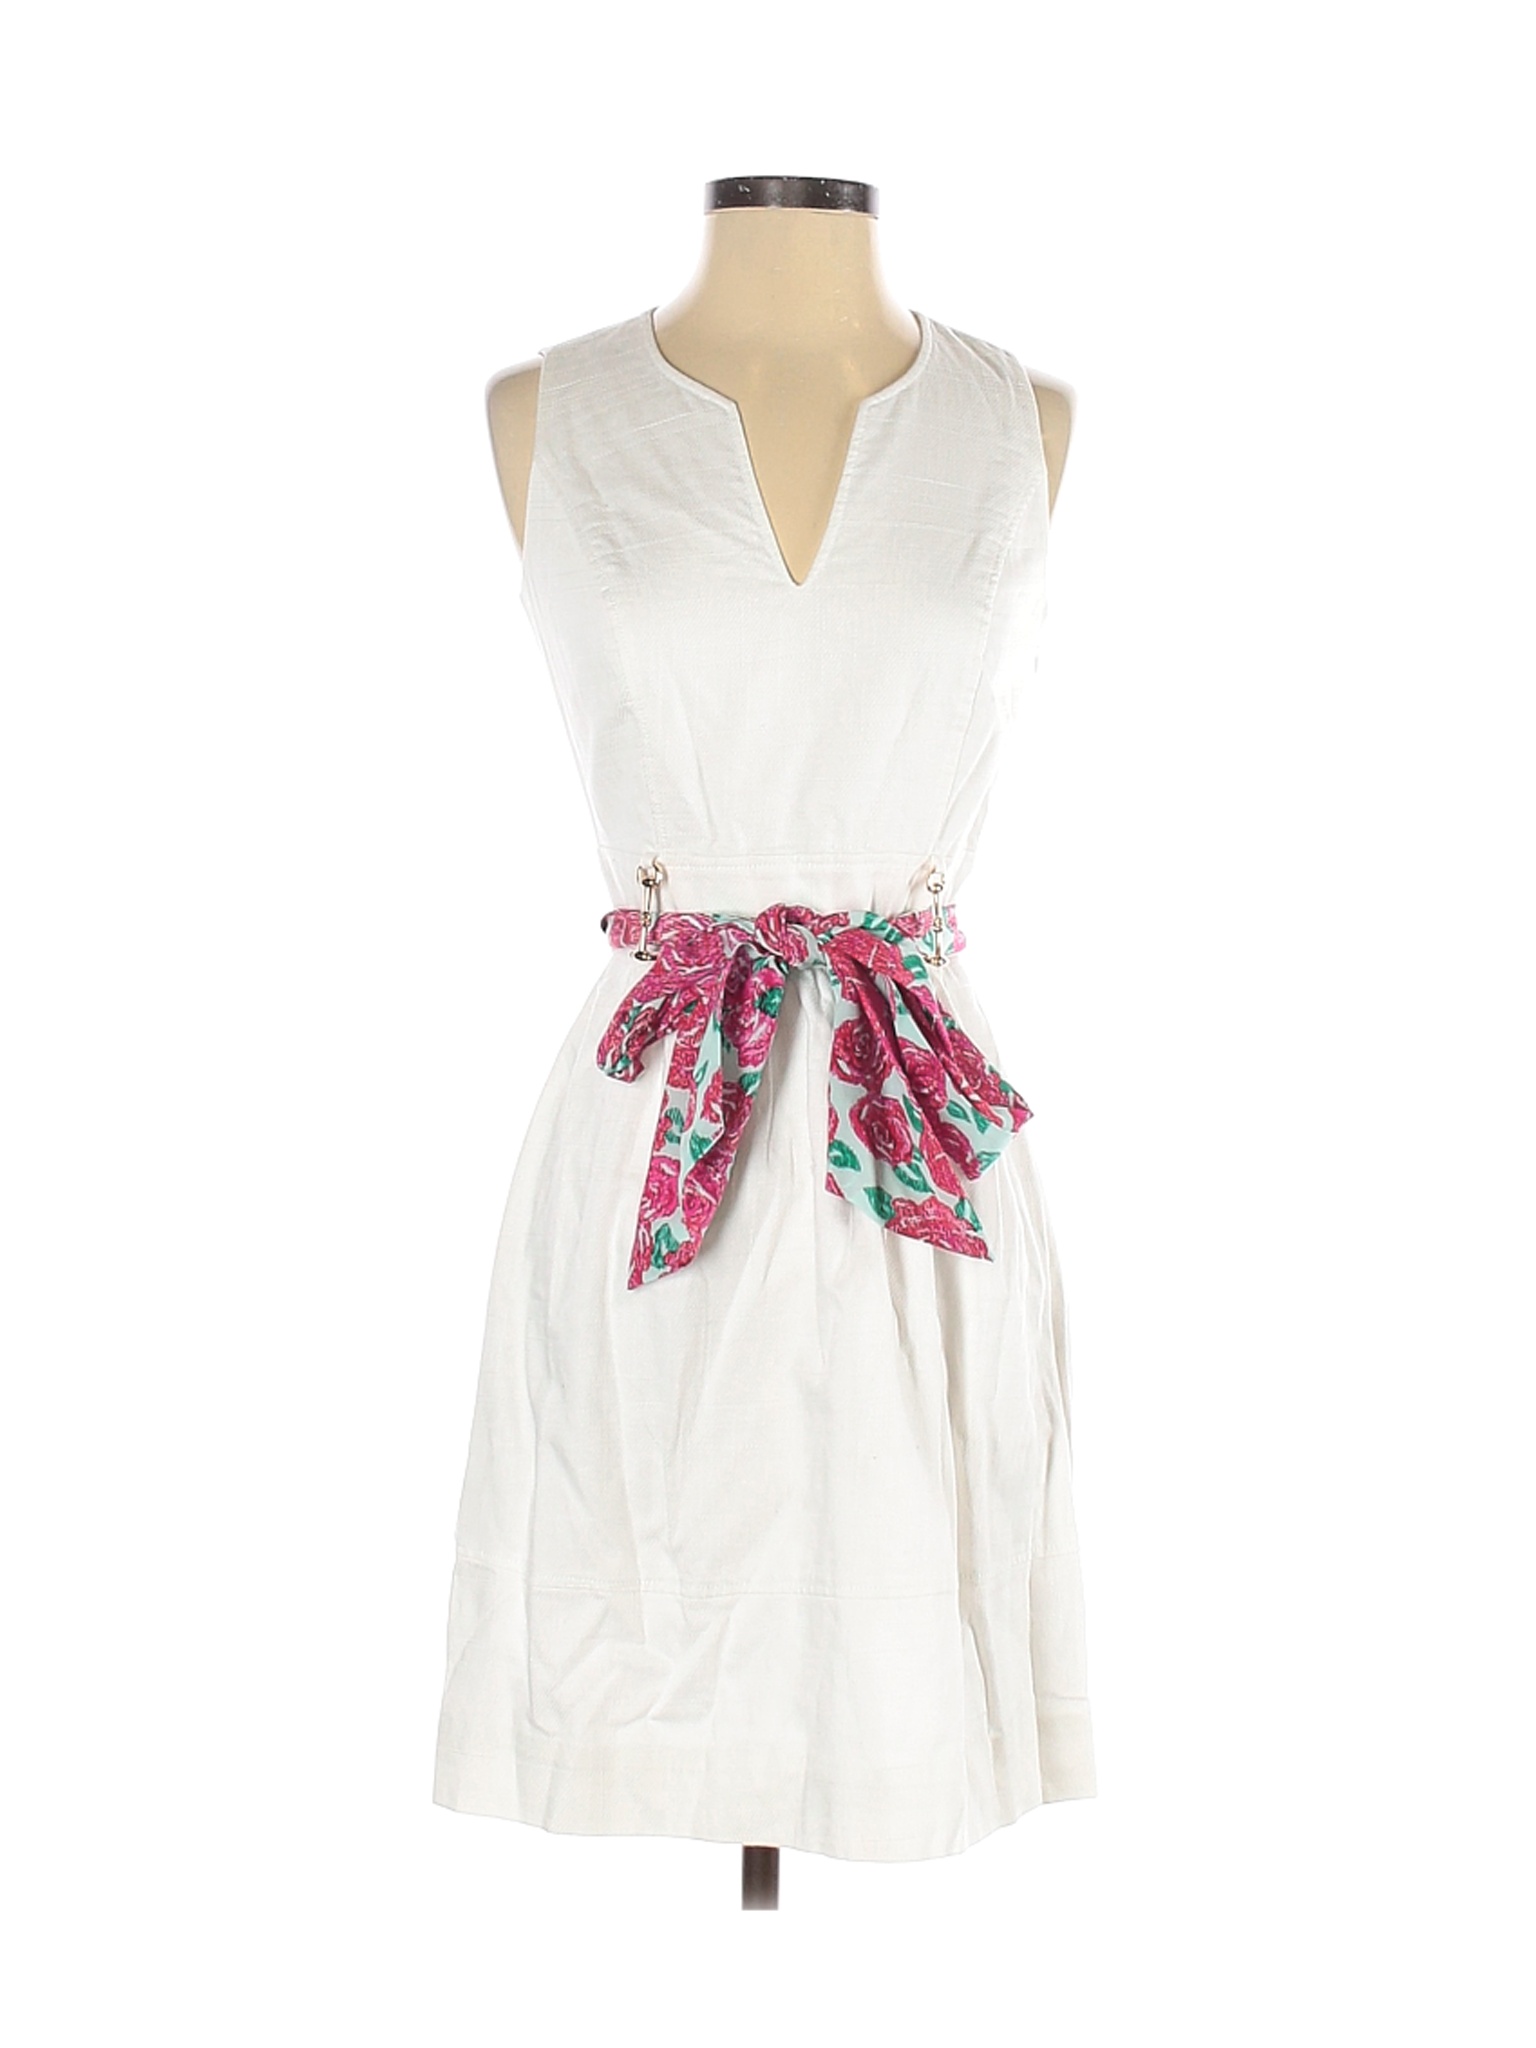 Vineyard Vines Women White Casual Dress 00 | eBay